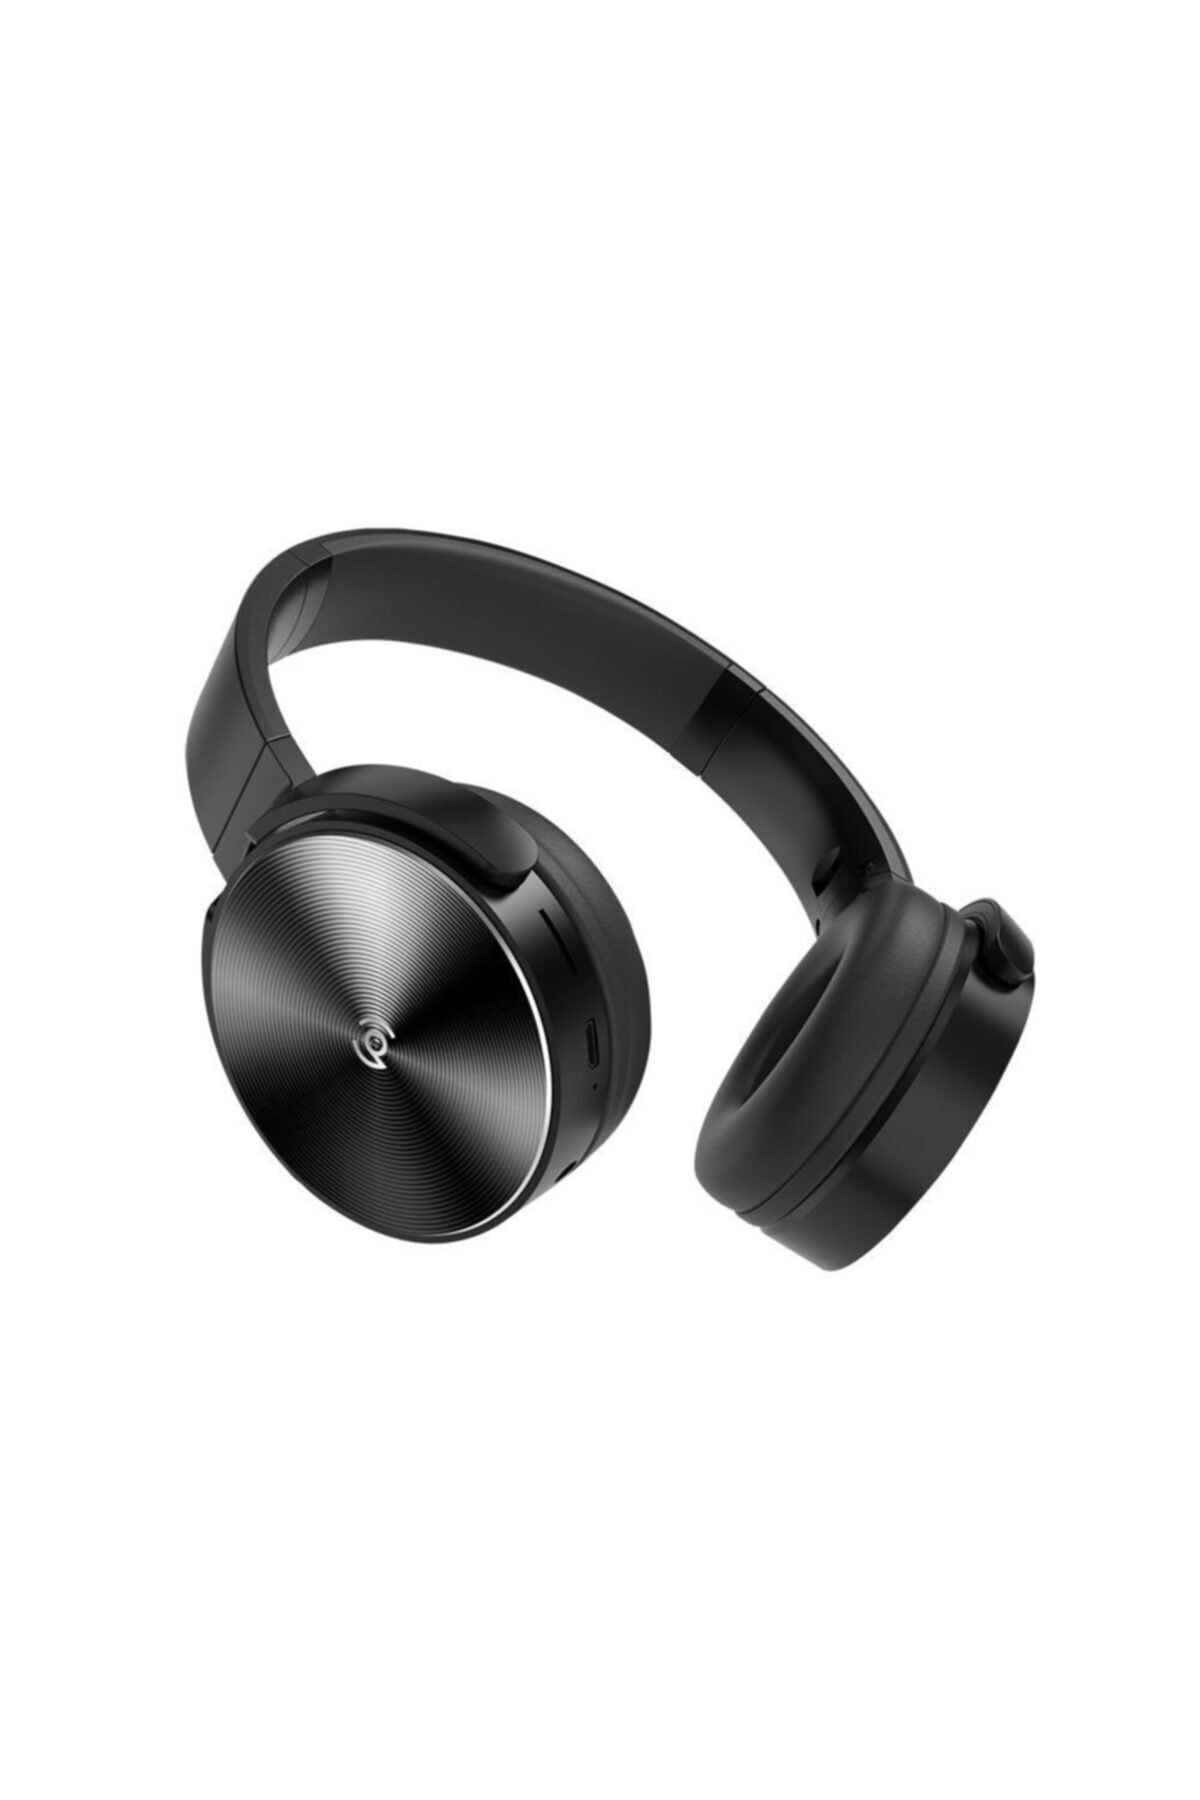 Polosmart Fs50 Let's Go Siyah Kablosuz Bluetooth 5.0 Kulaküstü Kulaklık